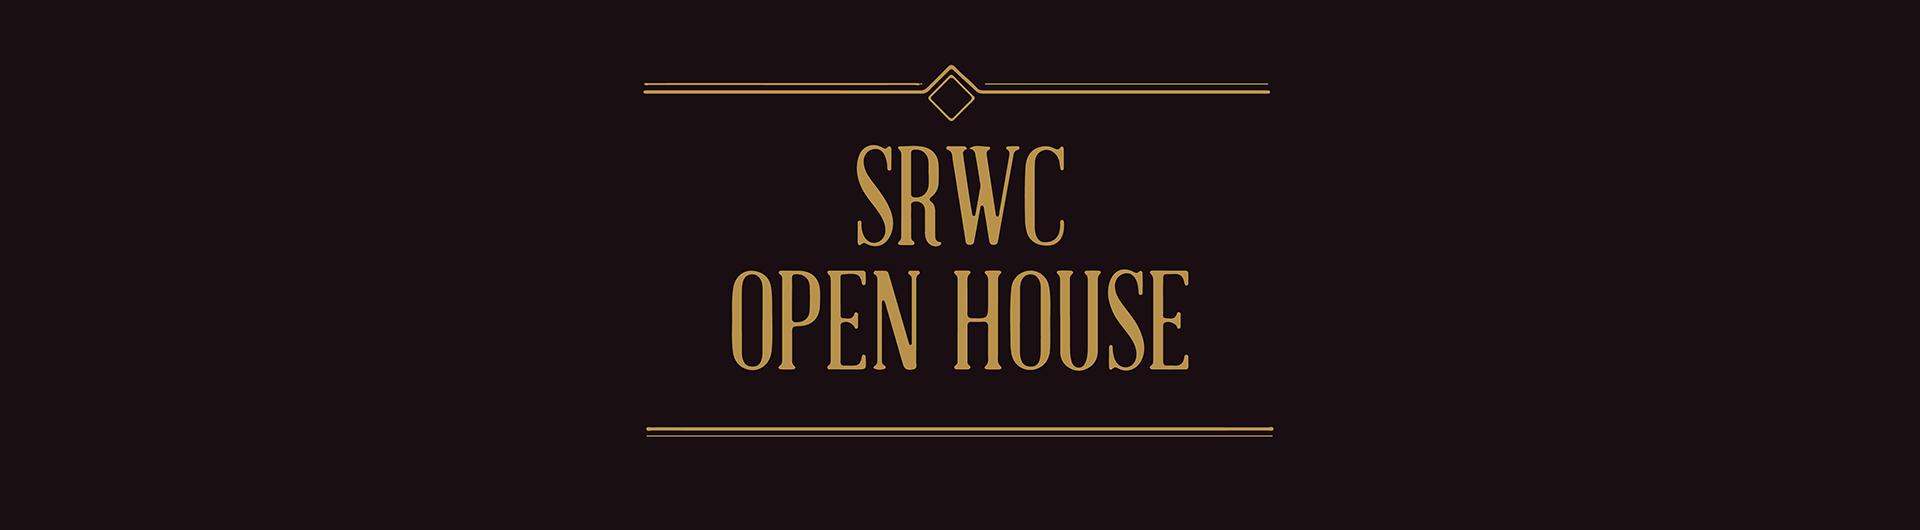 SRWC Open House